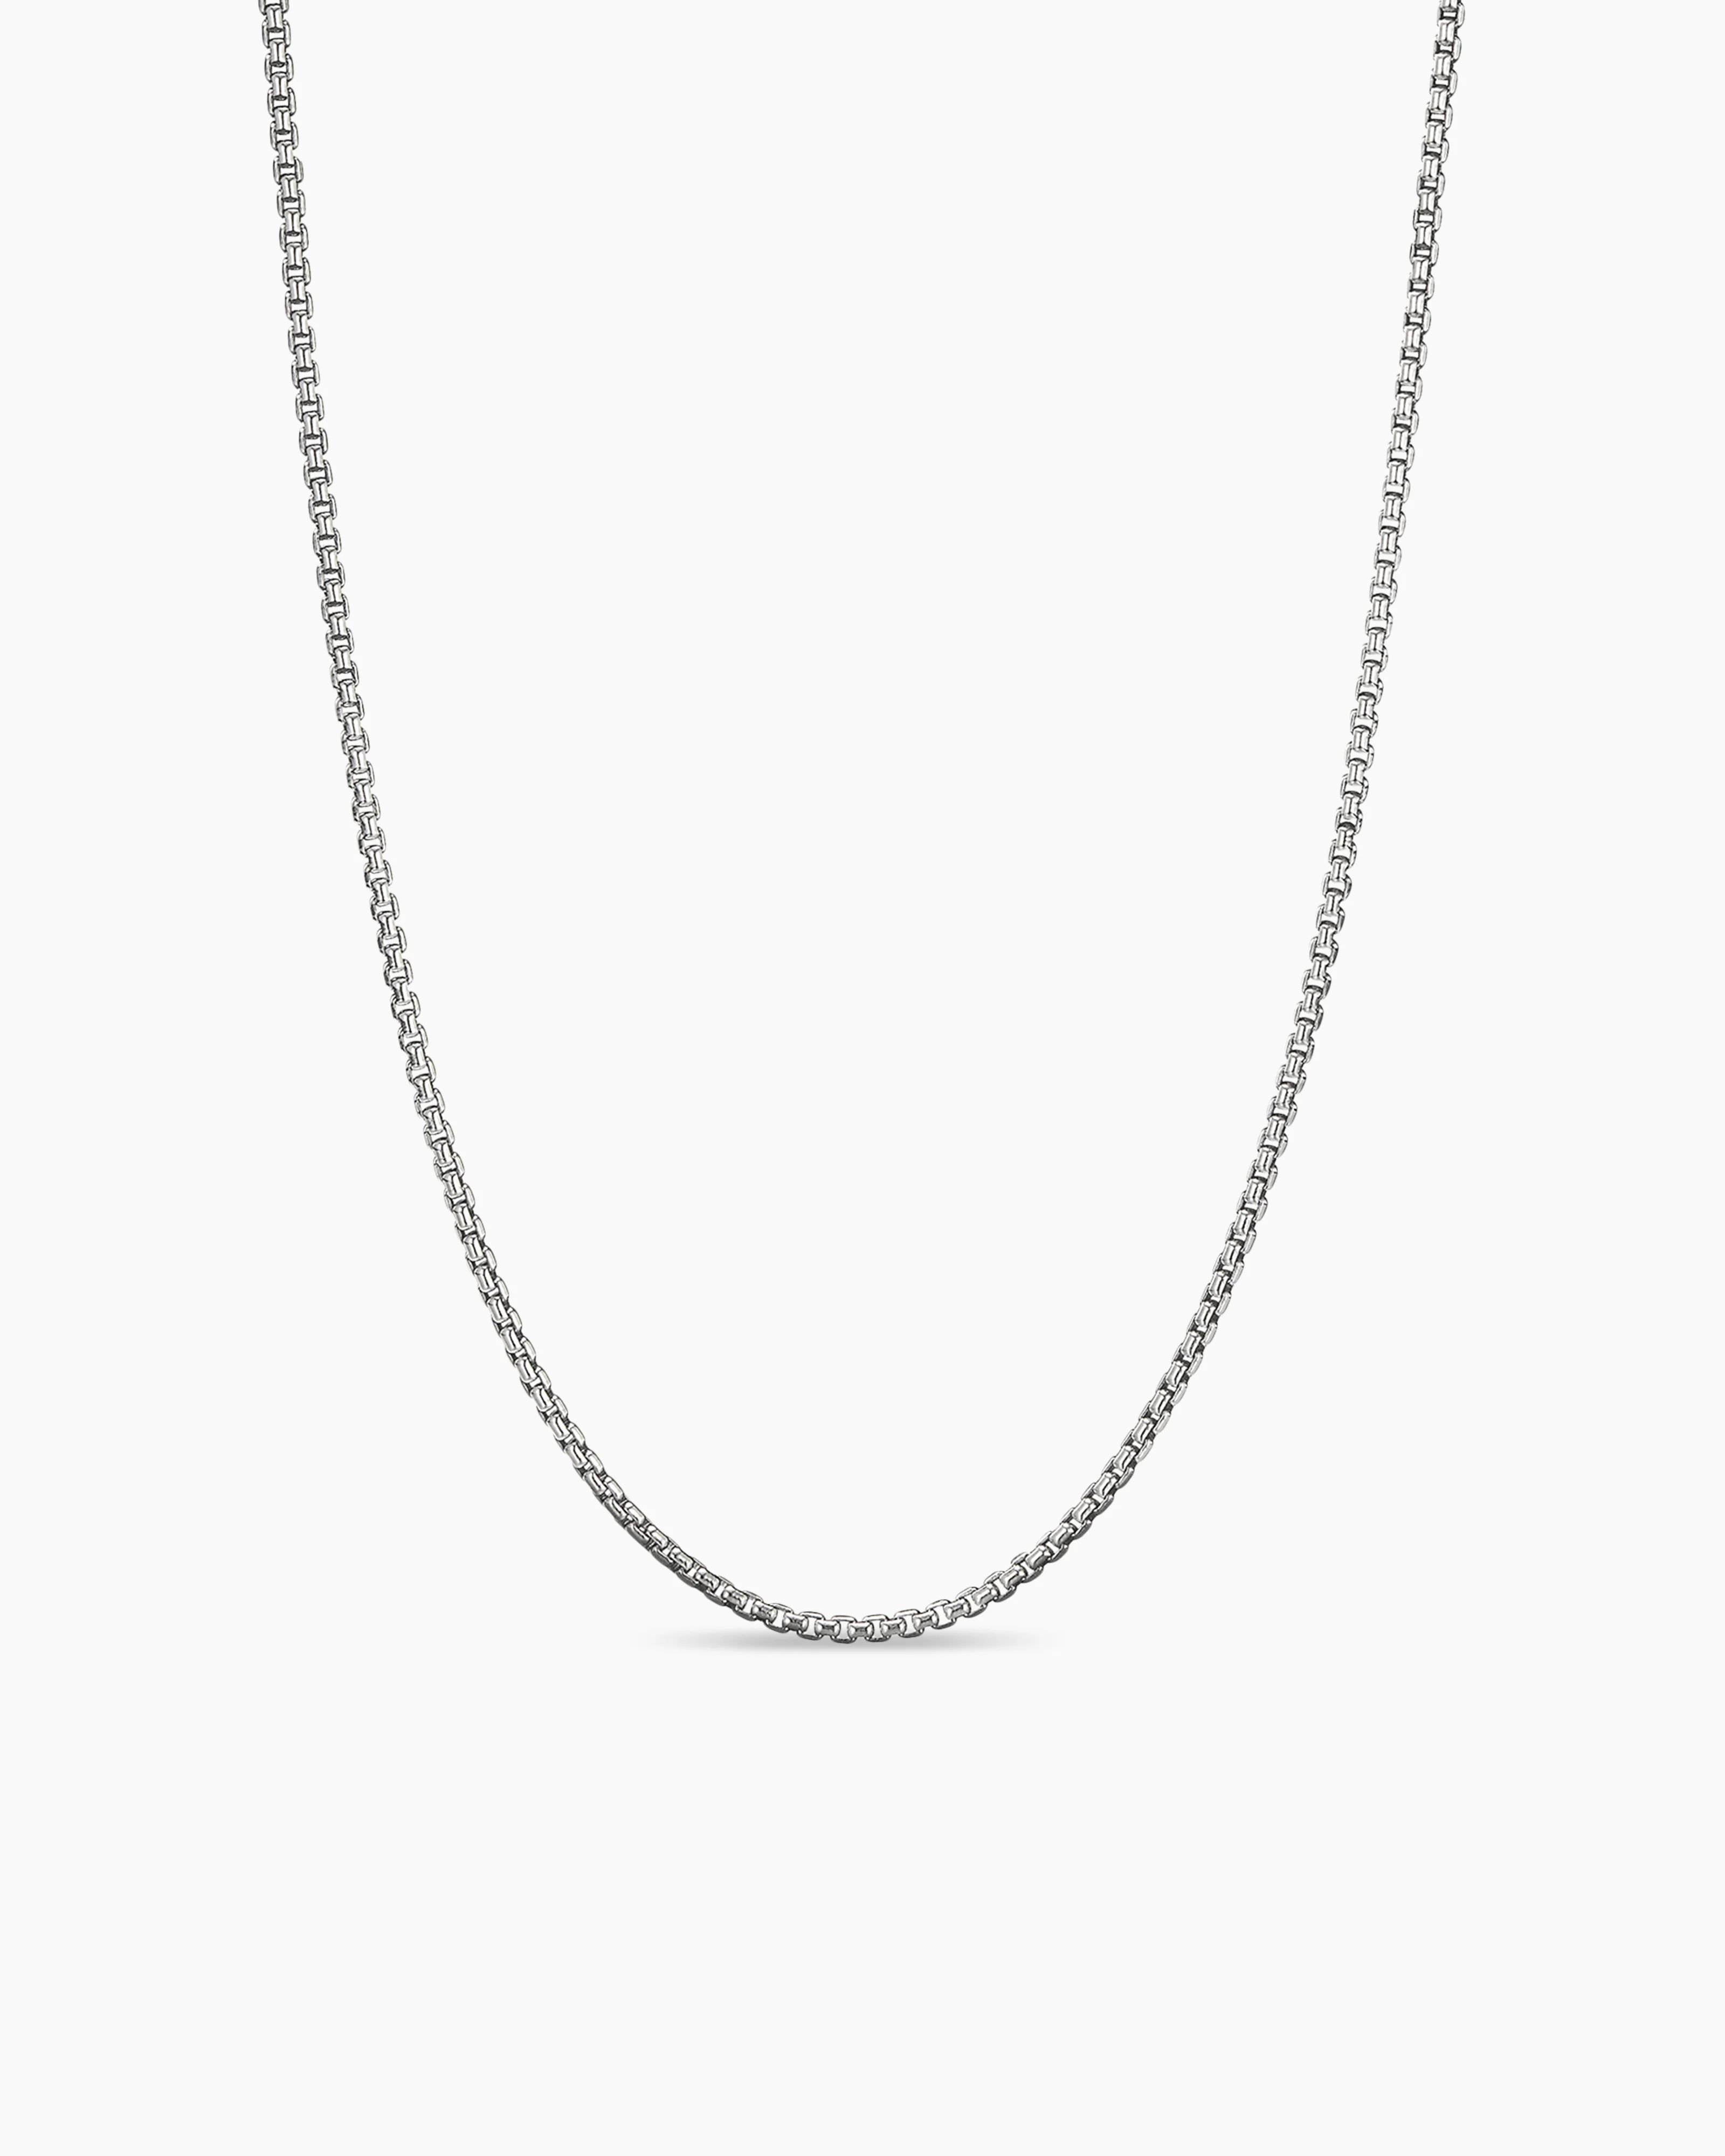 Box Chain Necklace

Sterling Silver, 1.7mm | David Yurman